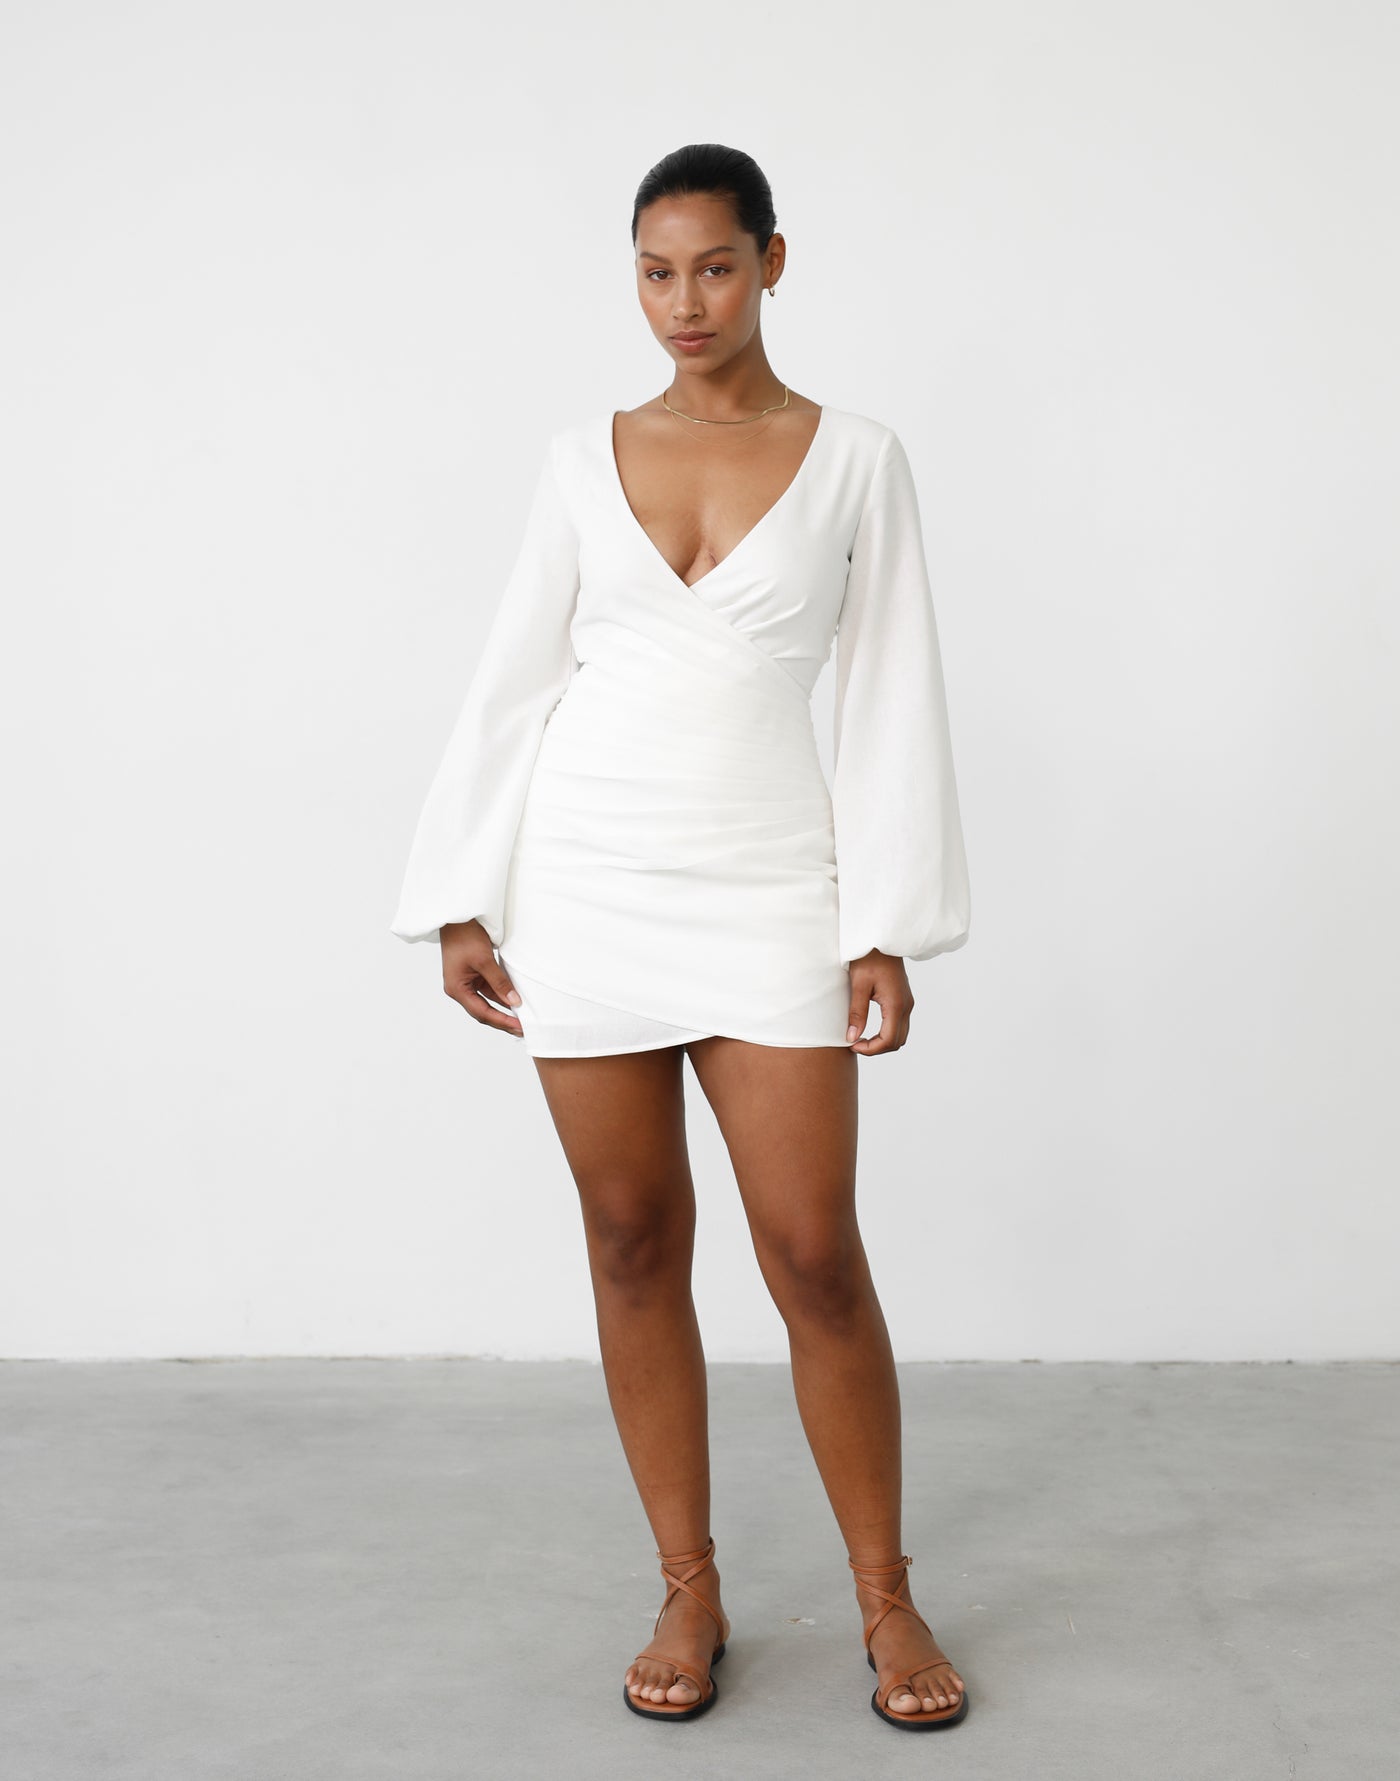 Caliyara Mini Dress (White) - White Mini Dress - Women's Dress - Charcoal Clothing